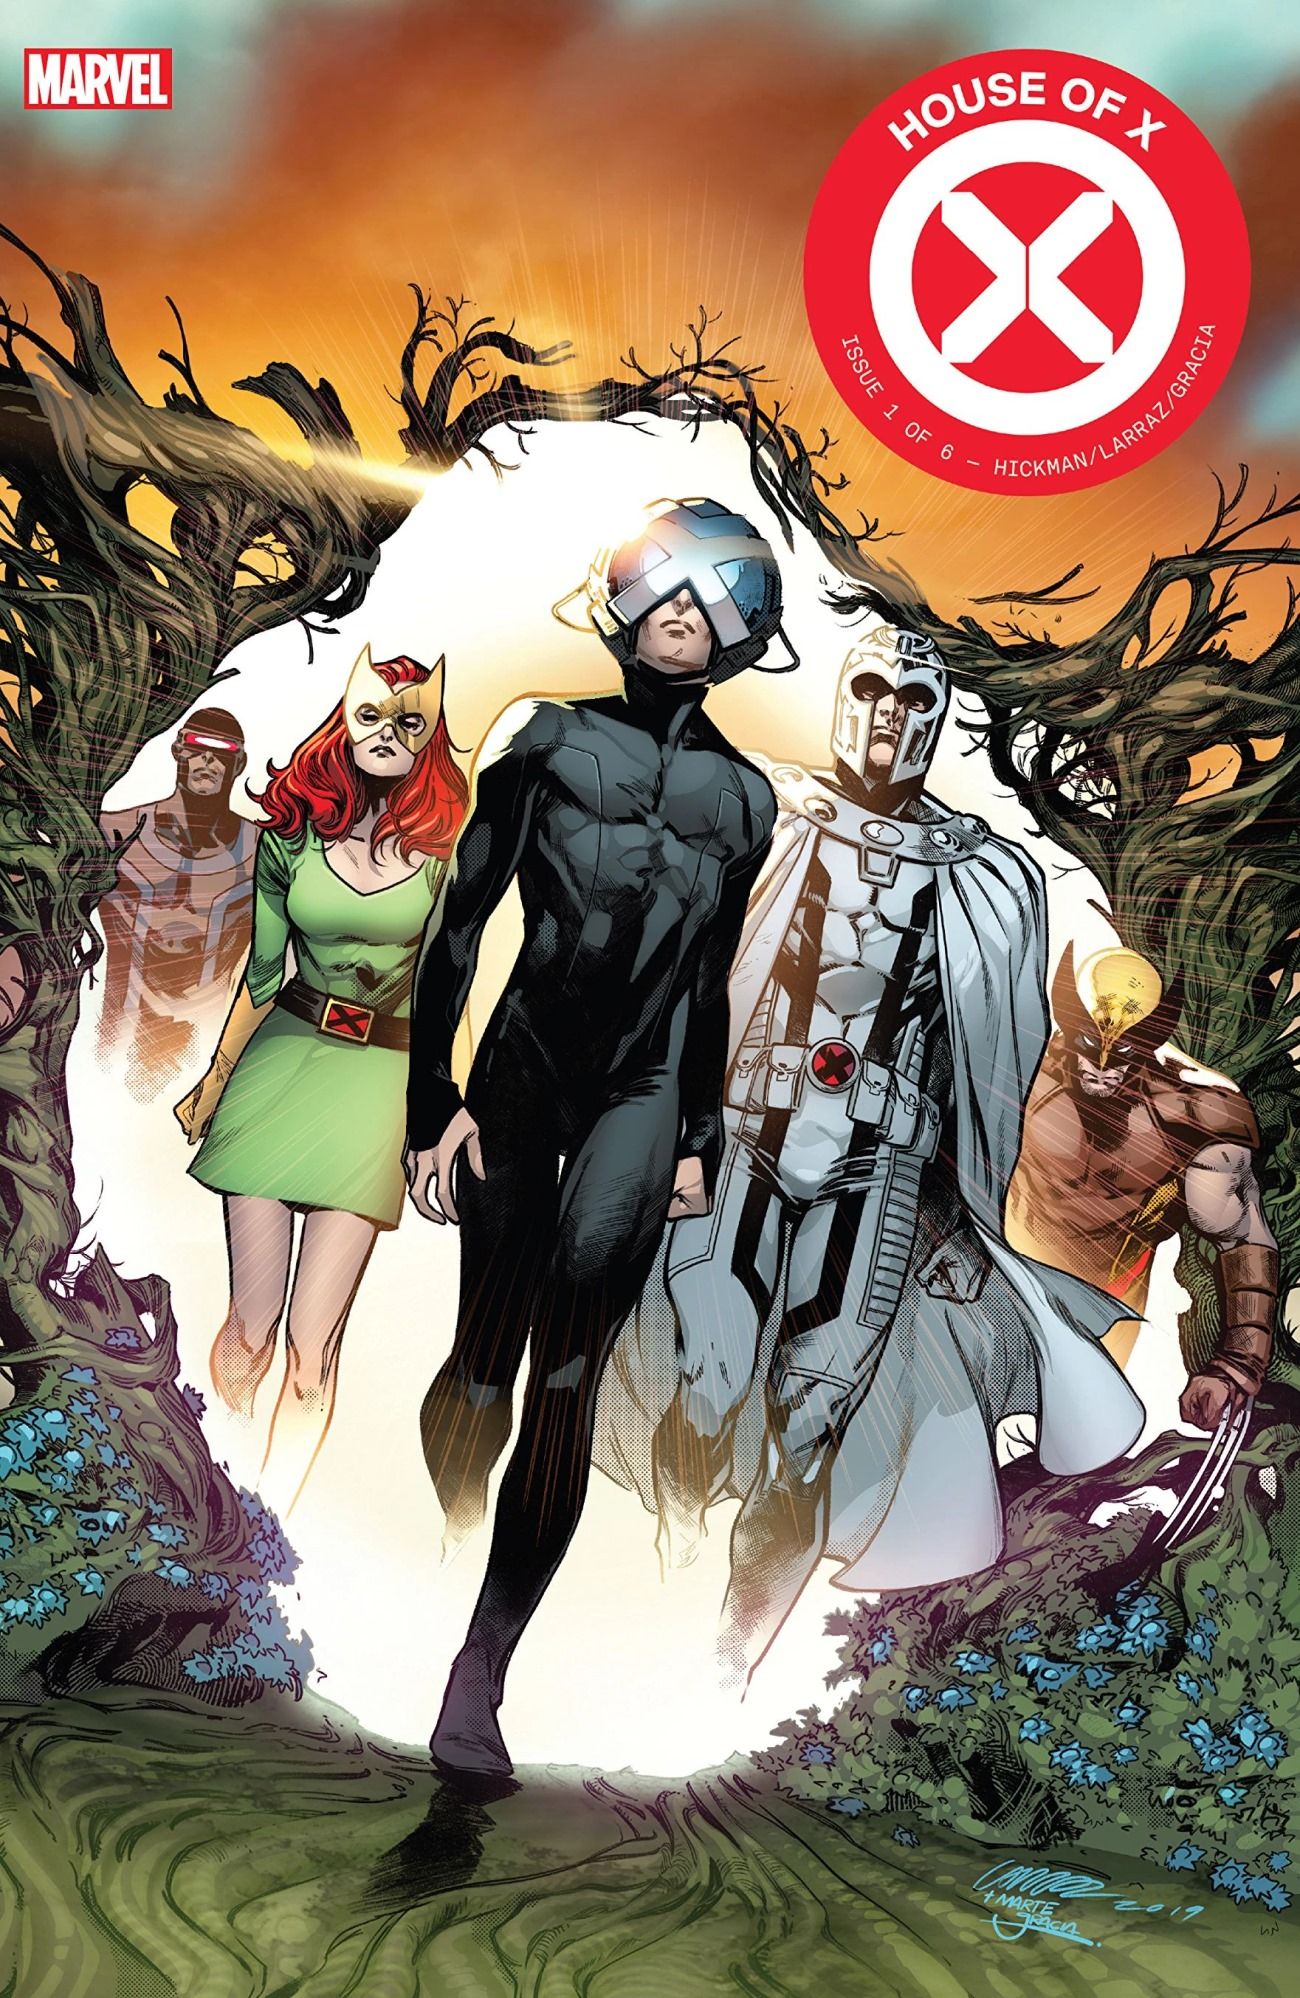 Mutants arrive on Krakoa in House of X #1 Marvel Comic Cover by Pepe Larraz and Marte Gracia